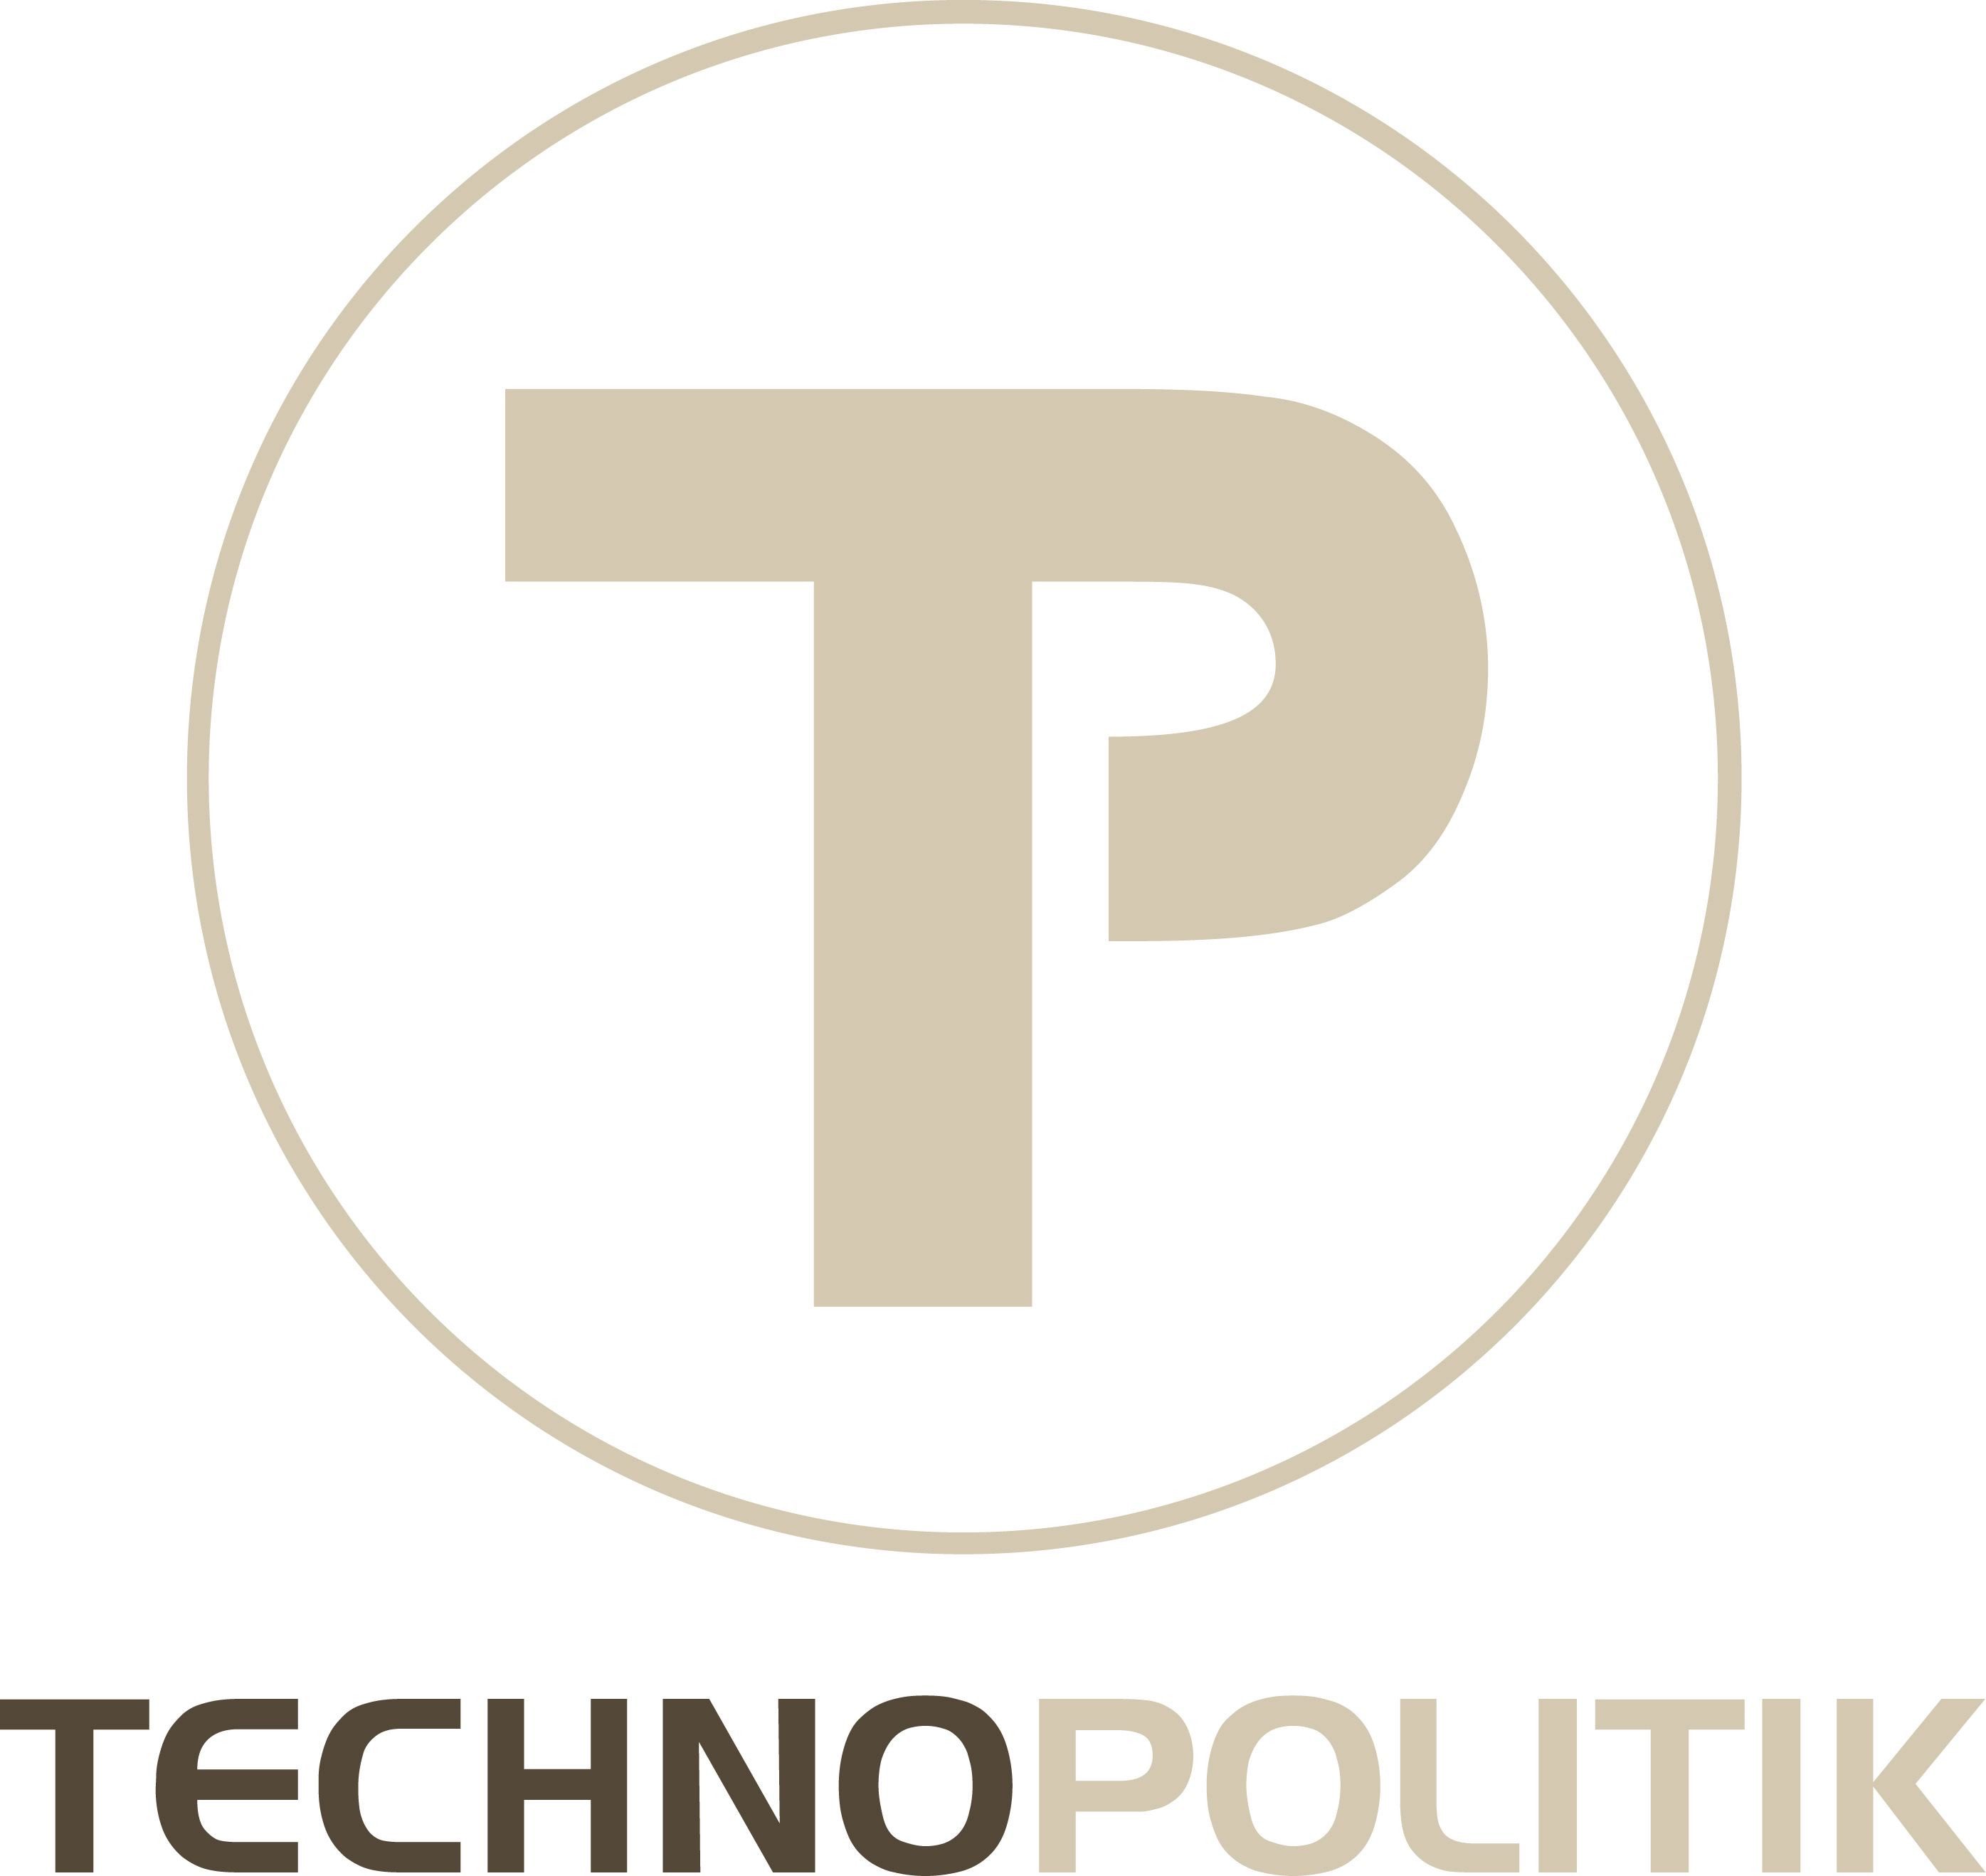 Technopolitik